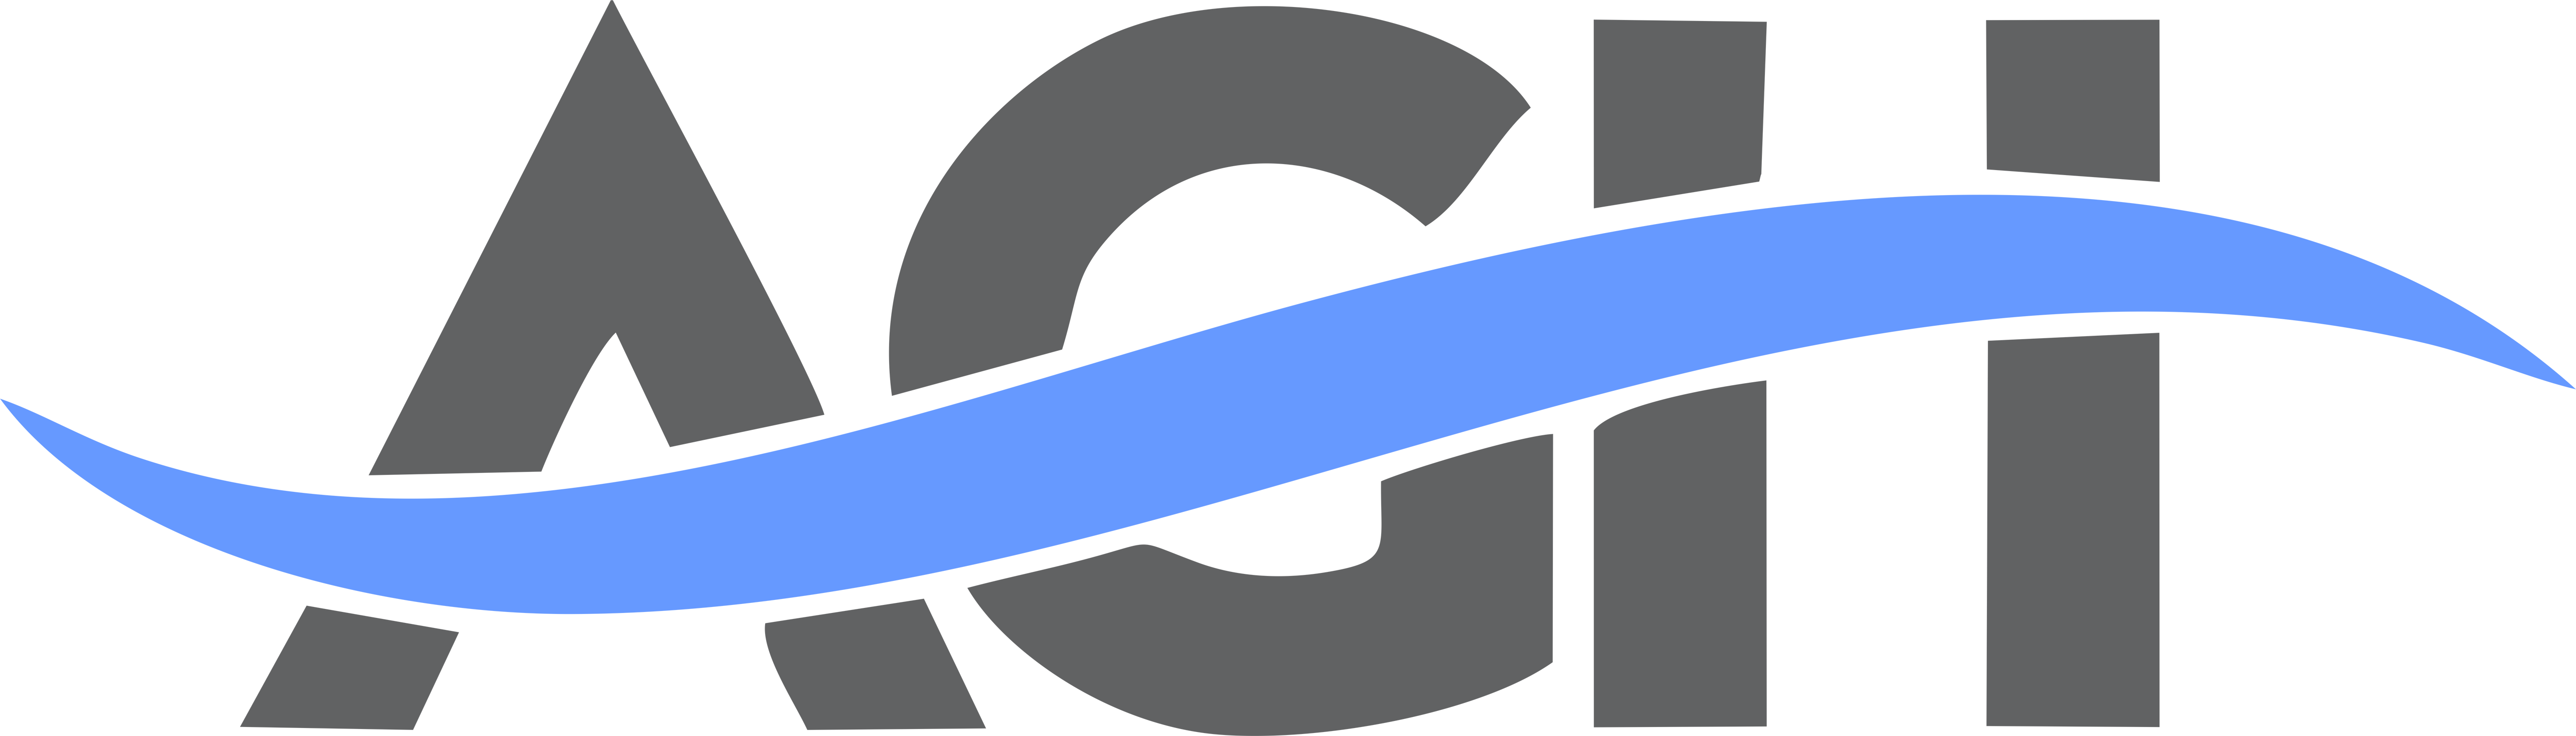 AGH logo – Ver2 5101x